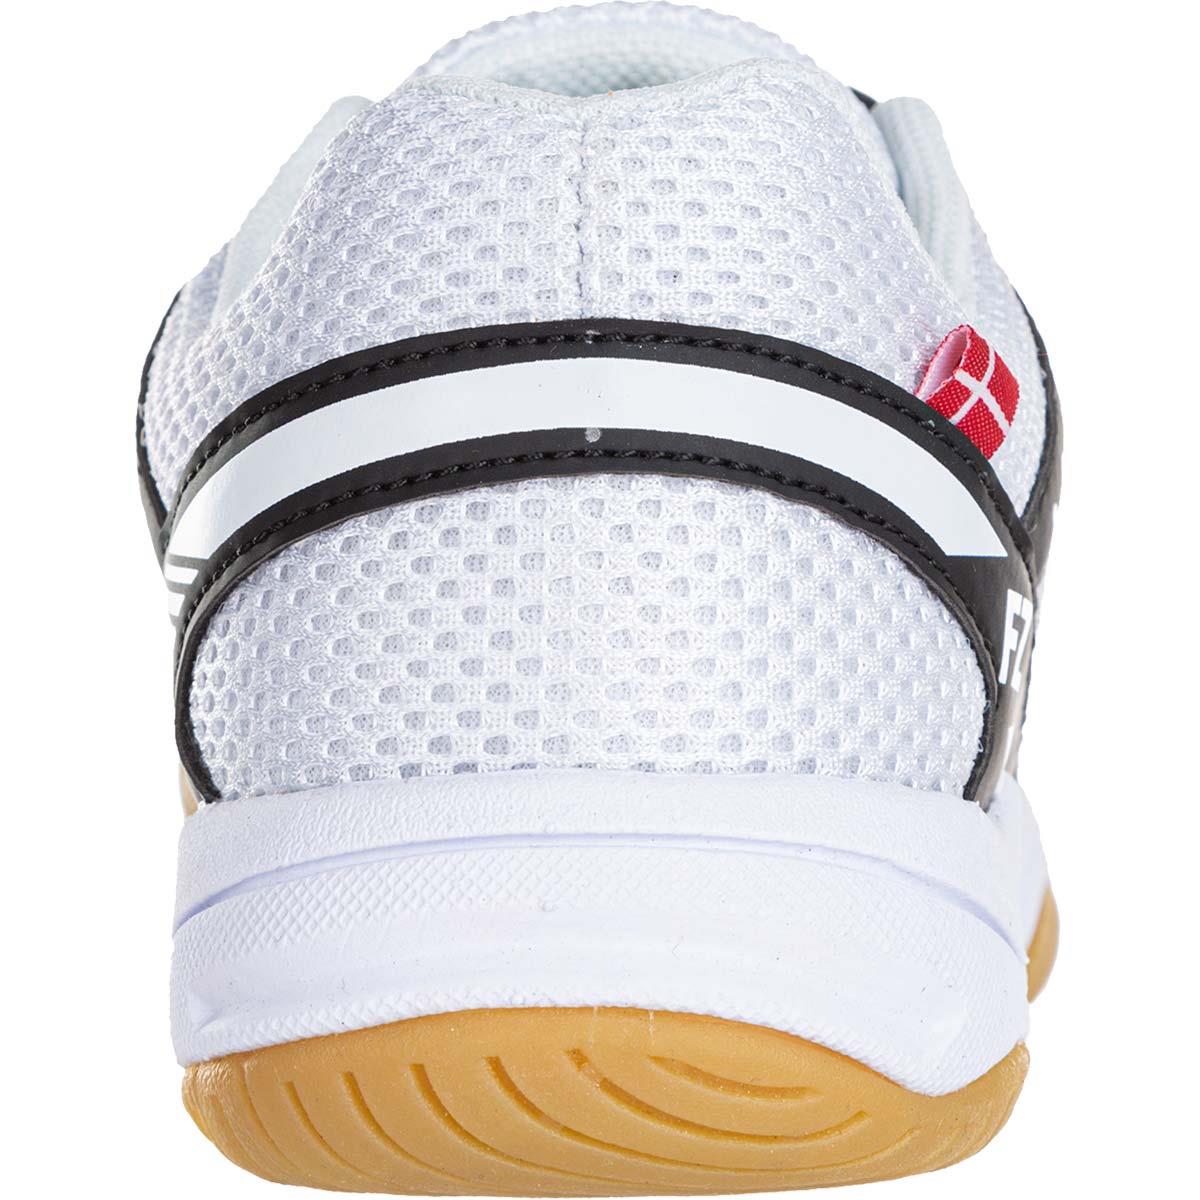 FZ Forza X-Pulse Junior Badminton Shoes - Black / White